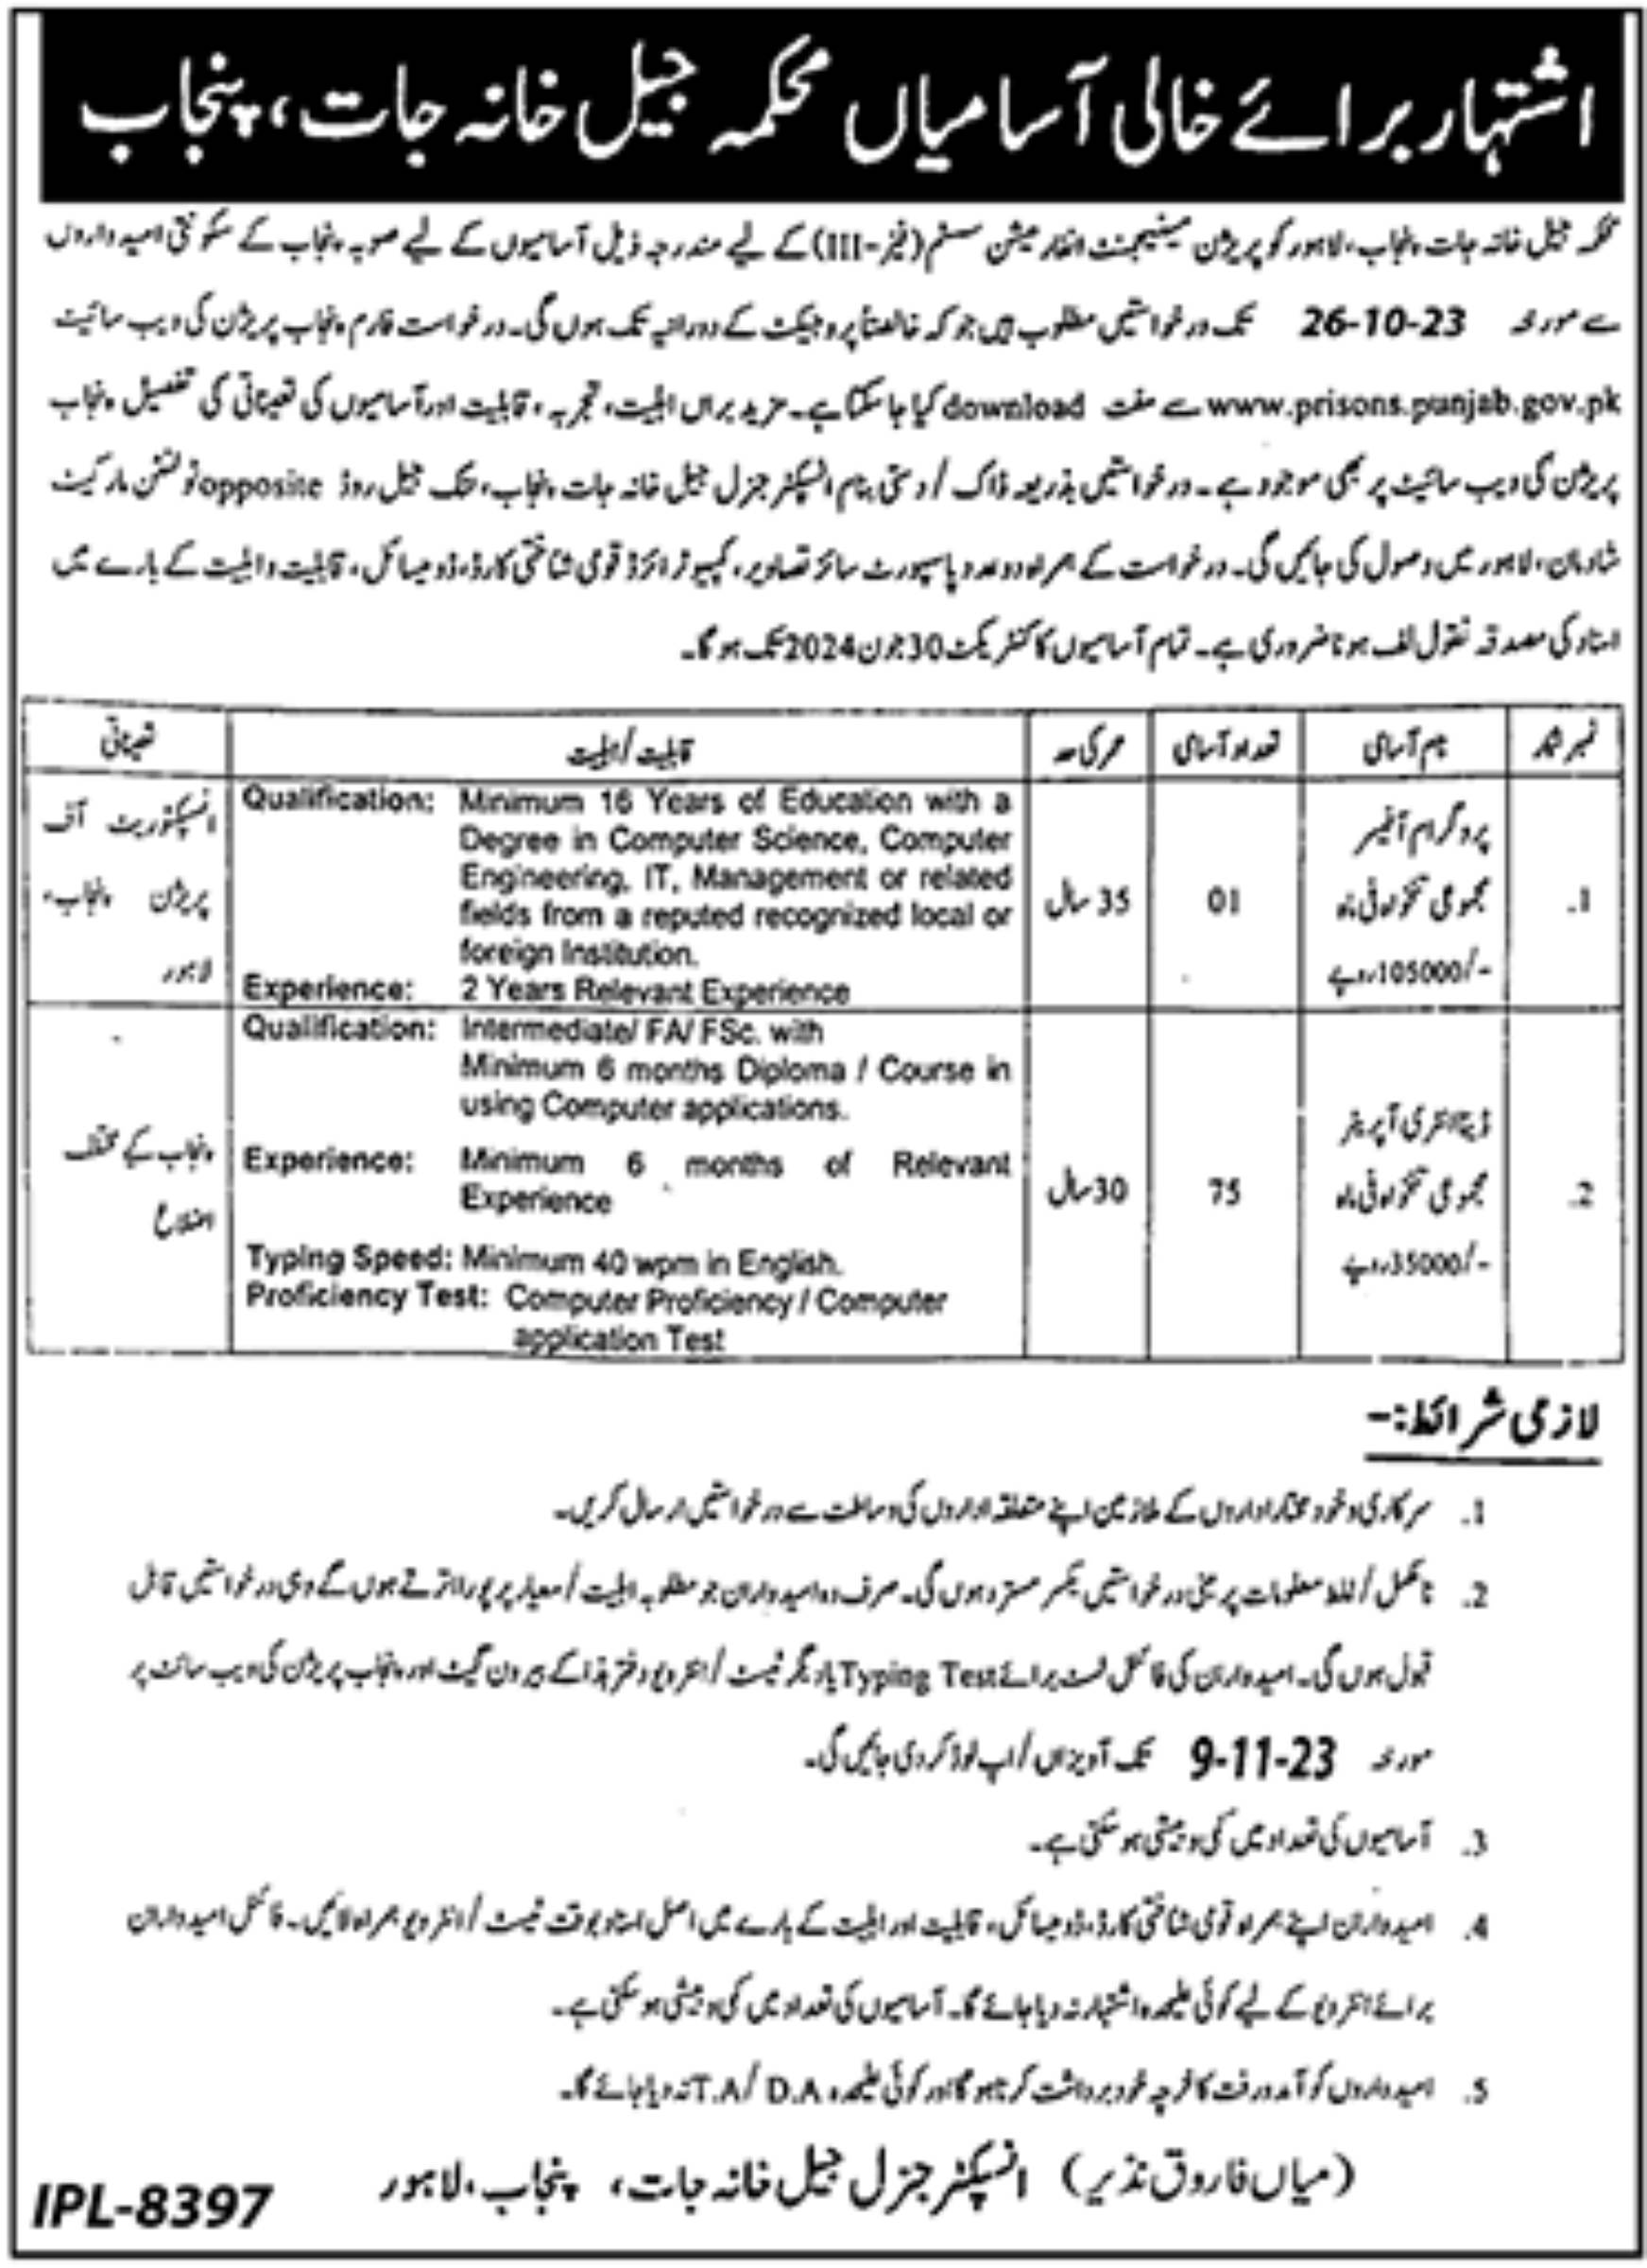 Prison Department Punjab Jobs 2023 (Jail Khana Jat) [76+ Seats]